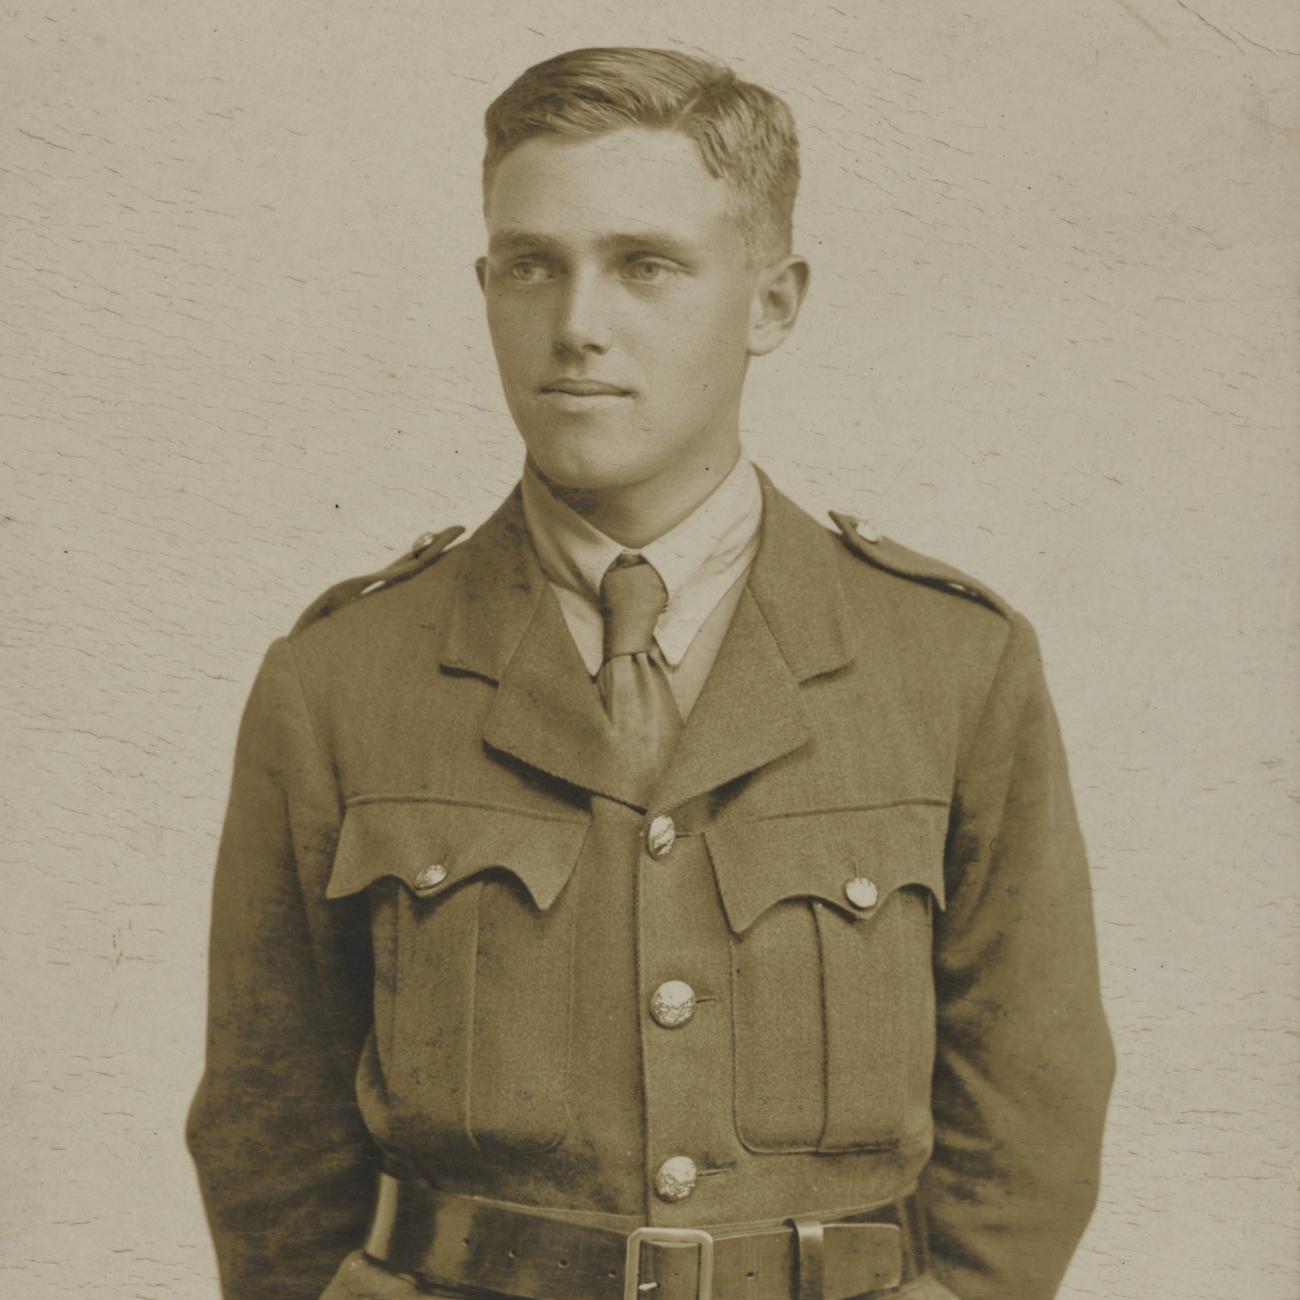 James Parkes wearing his World War 1 uniform